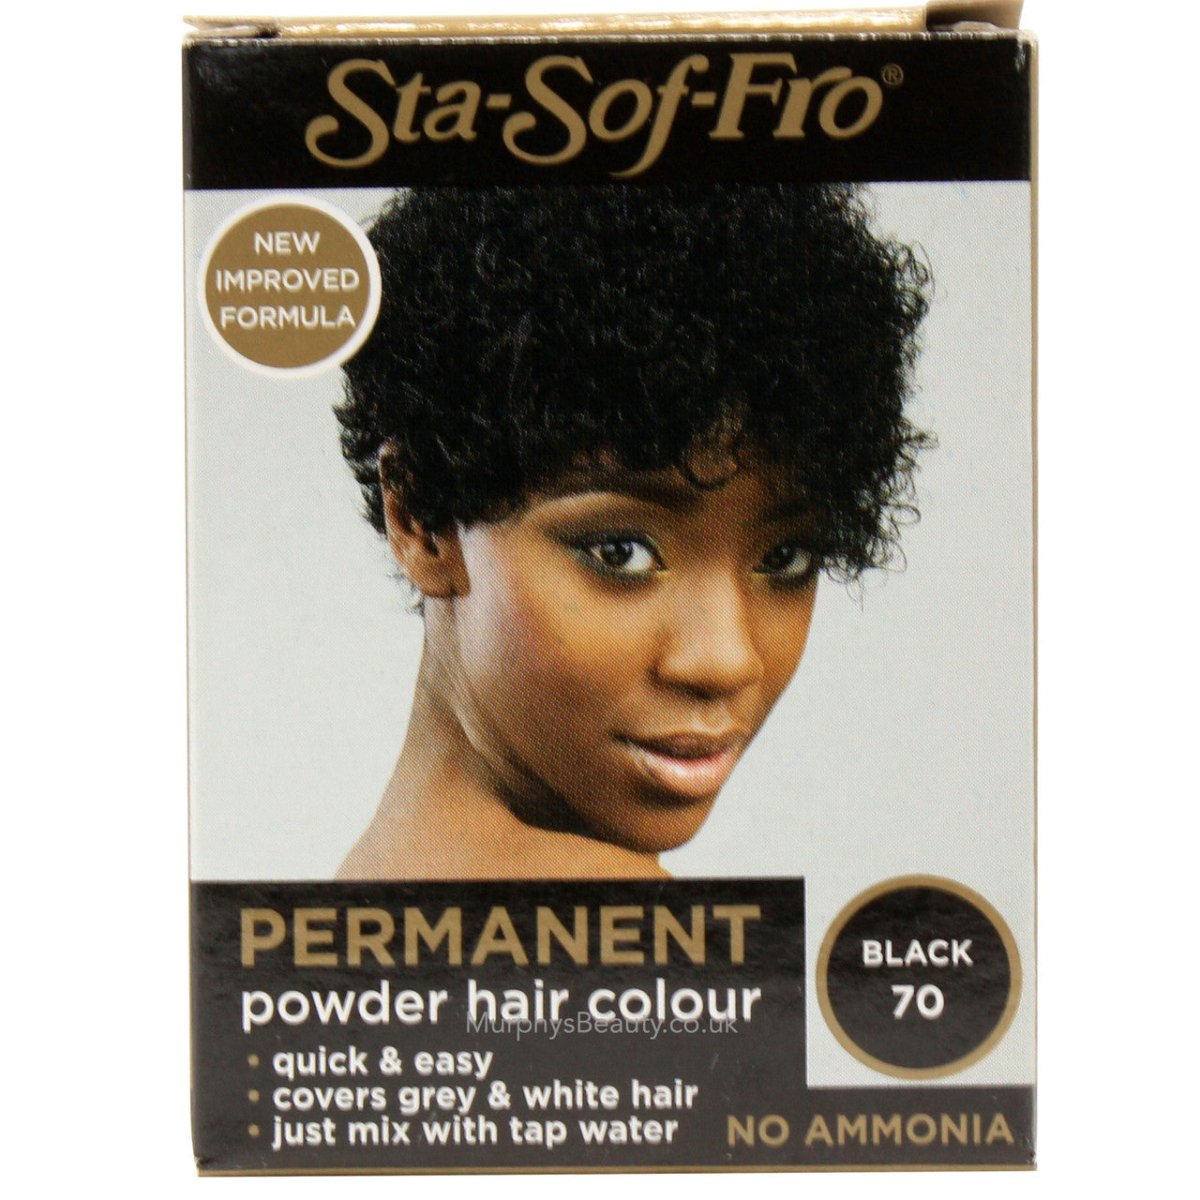 Sta-Sof-Fro Permanent Powder Hair Colour - Southwestsix Cosmetics Sta-Sof-Fro Permanent Powder Hair Colour Southwestsix Cosmetics Southwestsix Cosmetics 6001374047800 Black-70 Sta-Sof-Fro Permanent Powder Hair Colour